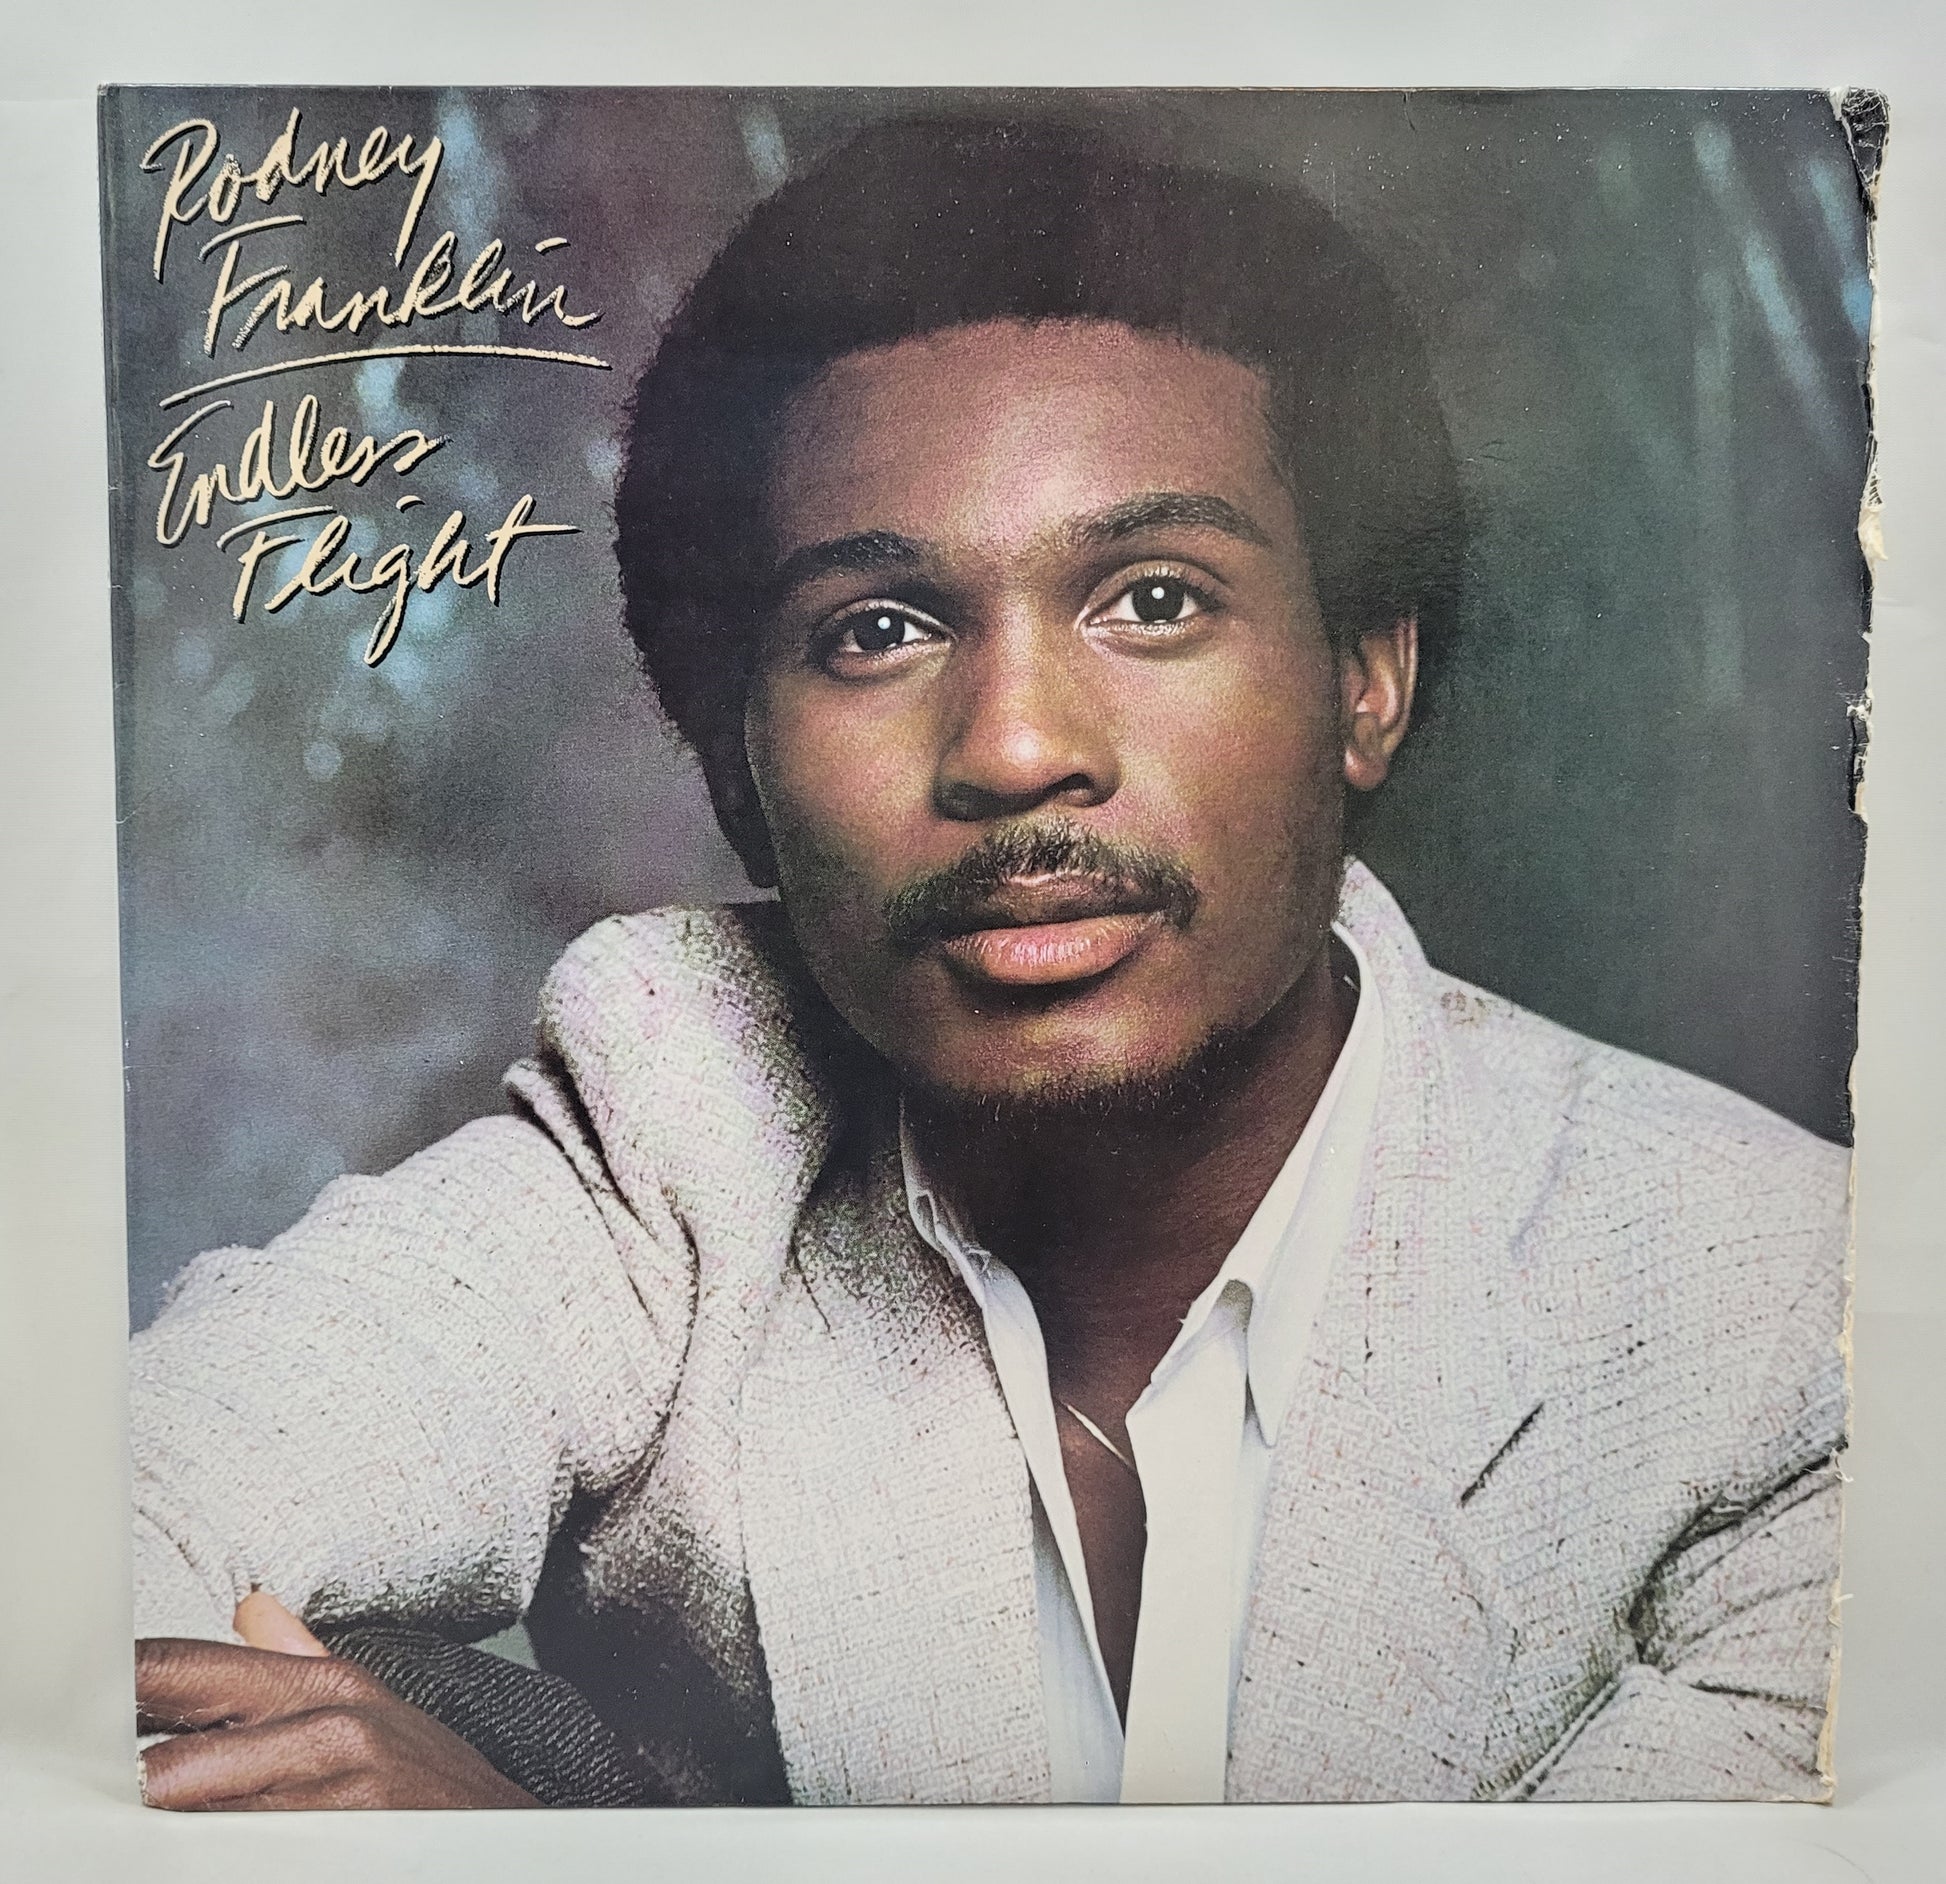 Rodney Franklin - Endless Flight [1981 Terre Haute] [Used Vinyl Record LP]